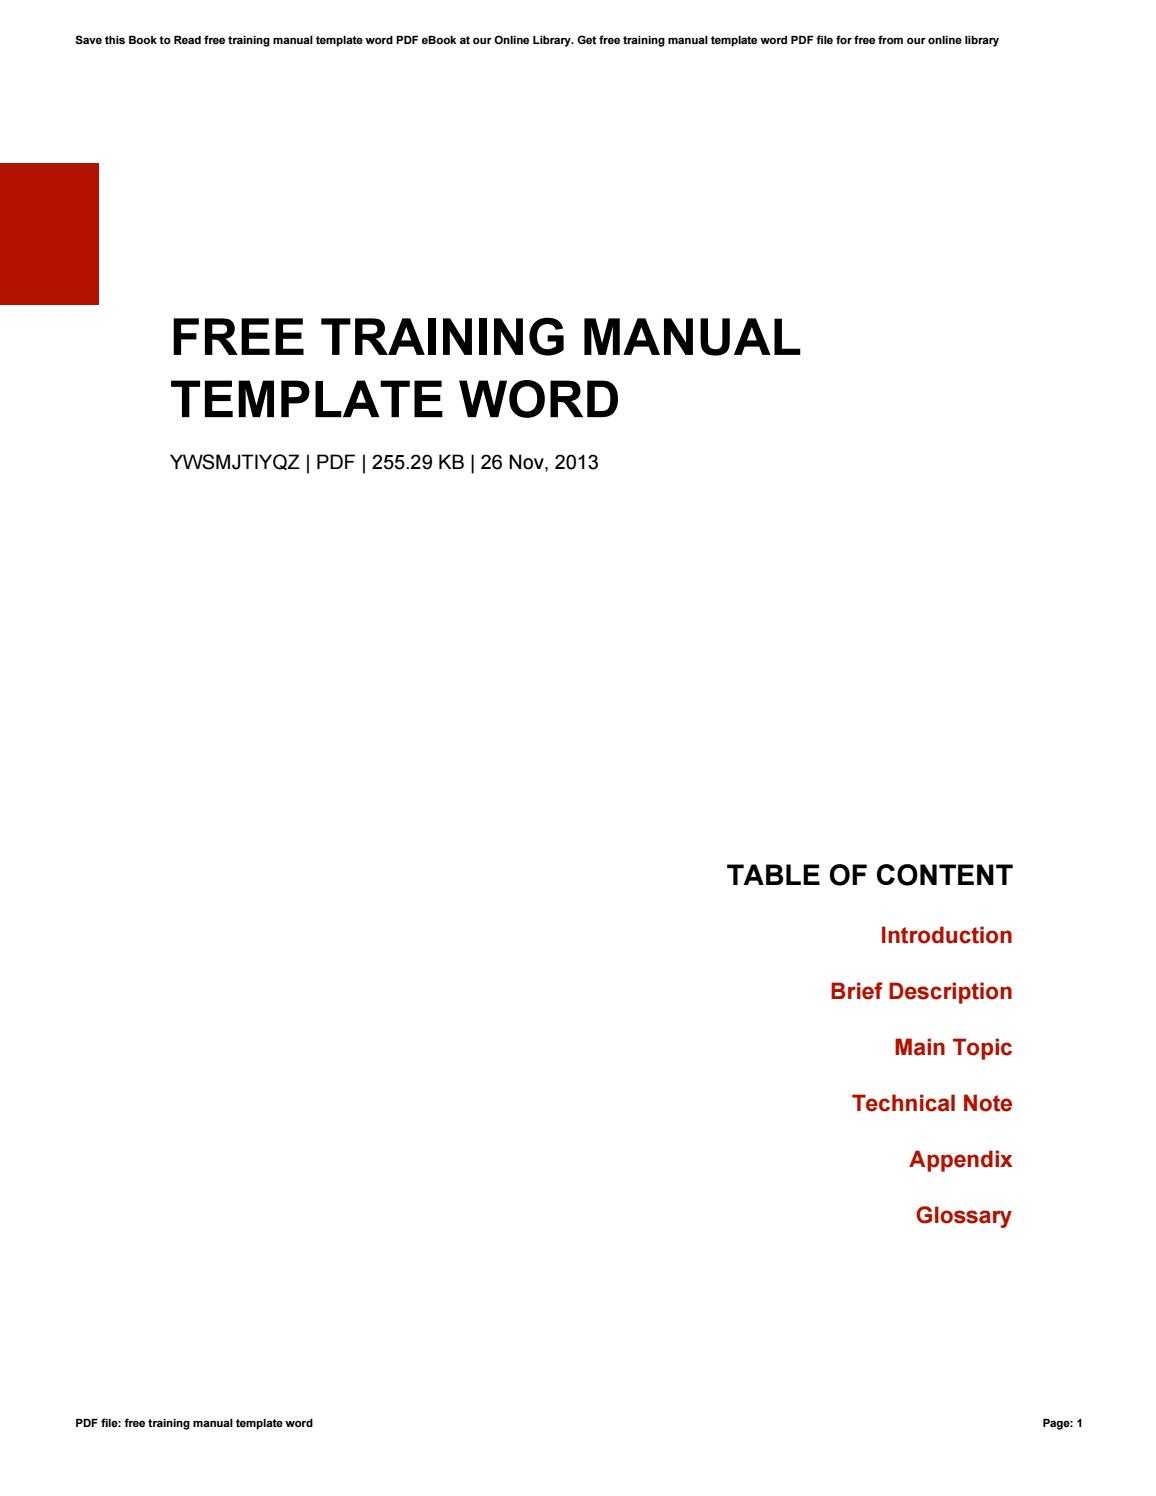 Free Training Manual Template Wordkazelink257 - Issuu With Training Documentation Template Word